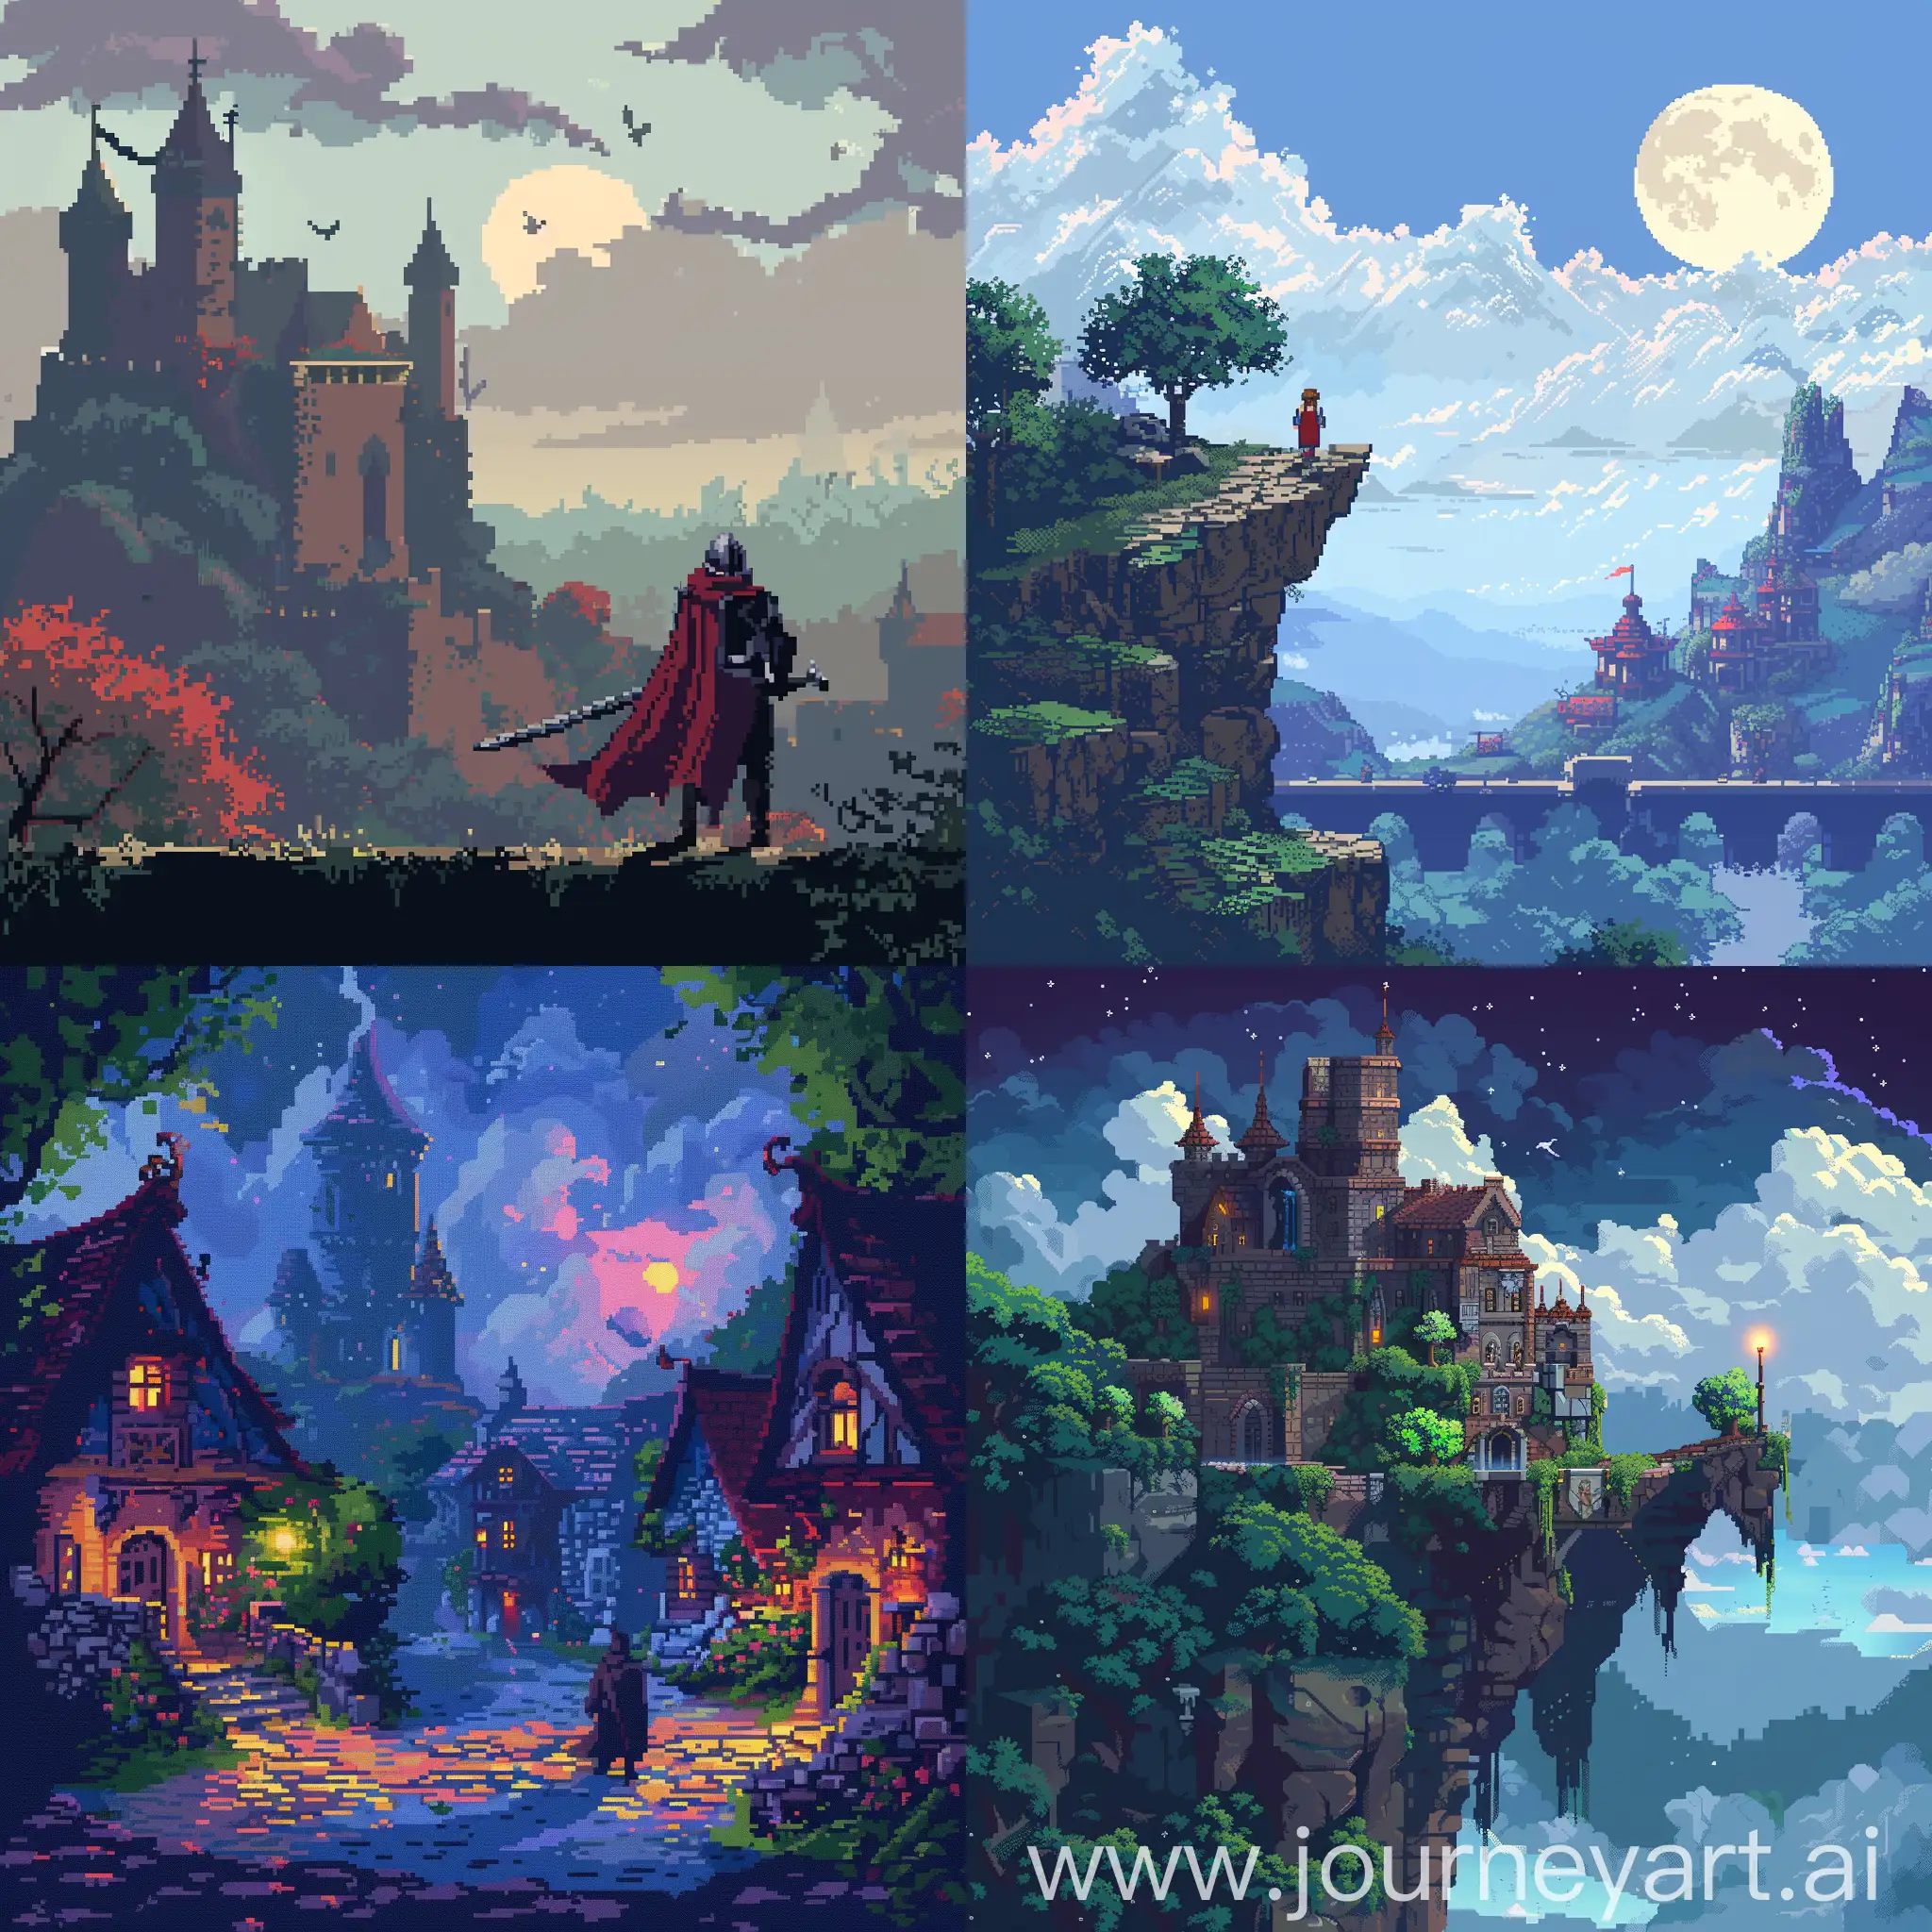 Pixelated-Fantasy-Adventures-Colorful-Pixel-Art-Fantasy-Scene